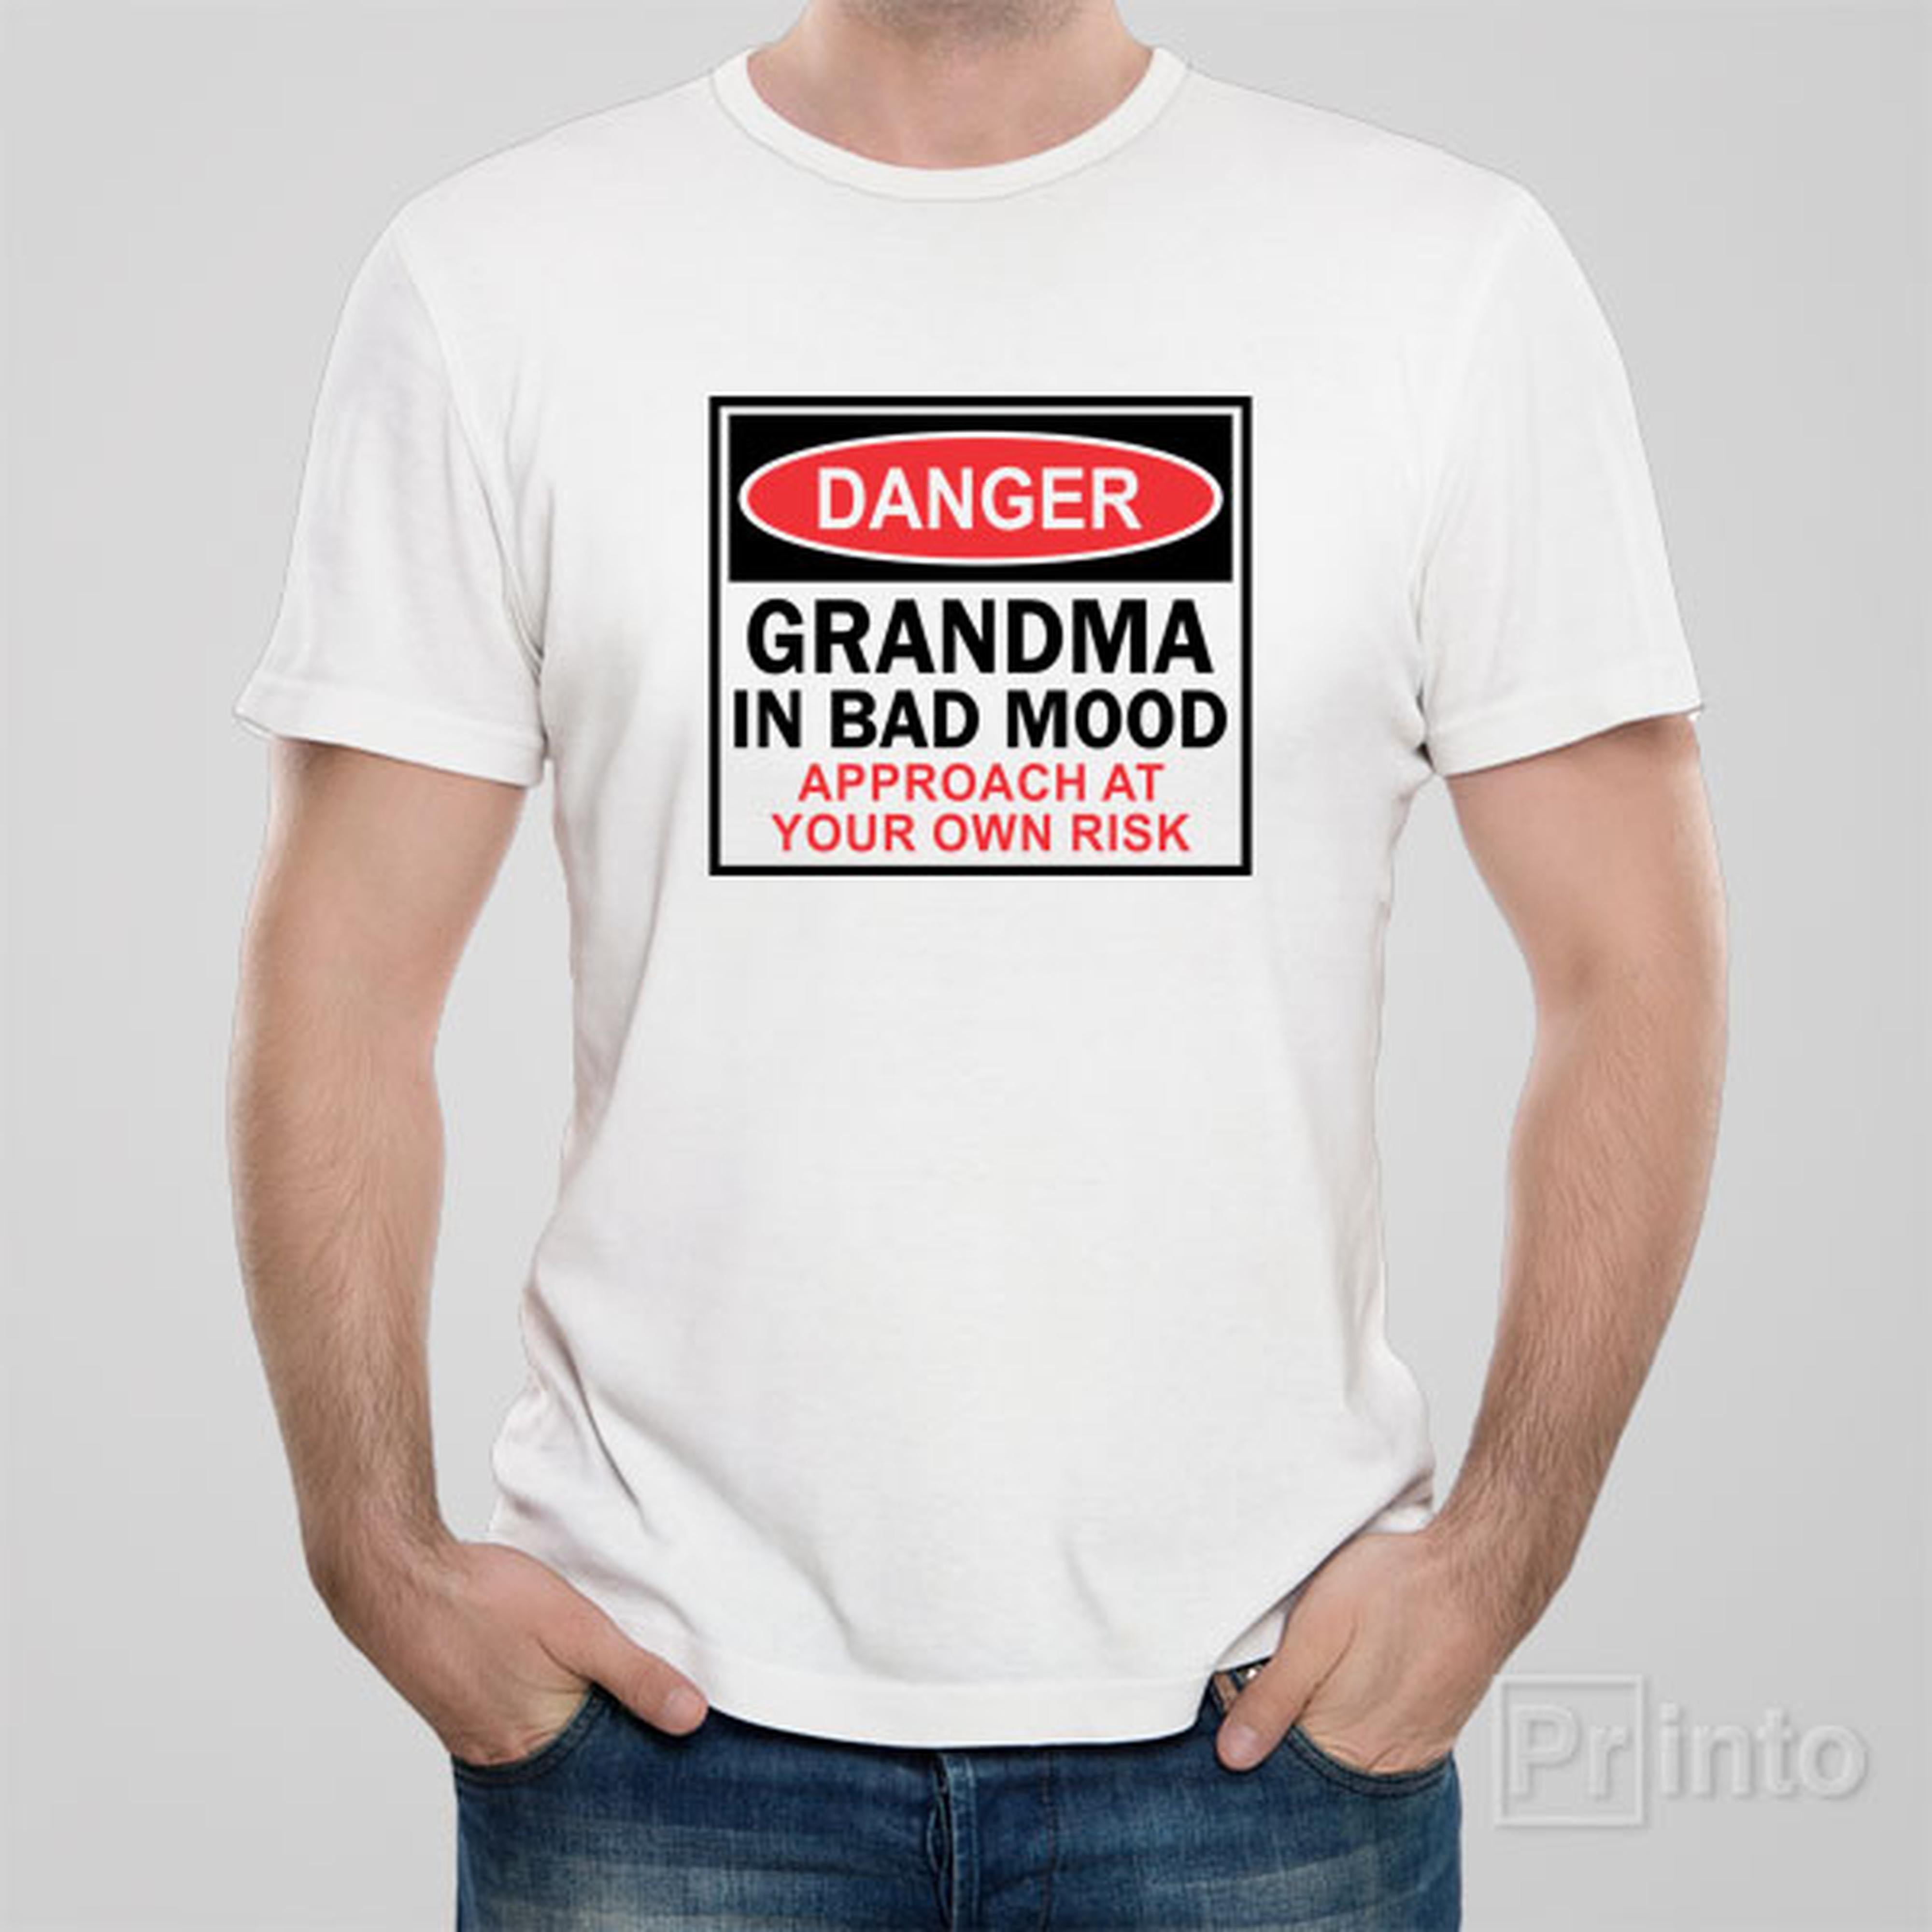 grandma-in-bad-mood